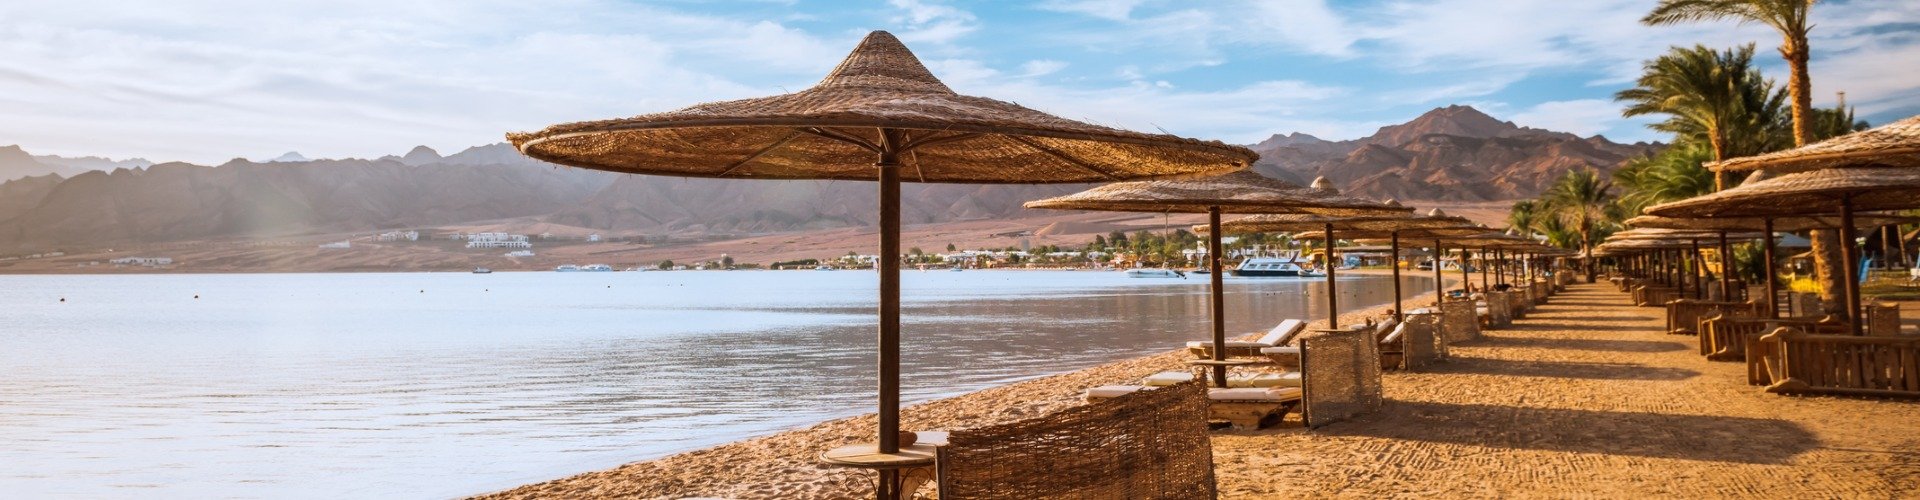 Familienurlaub in Hurghada und Safaga